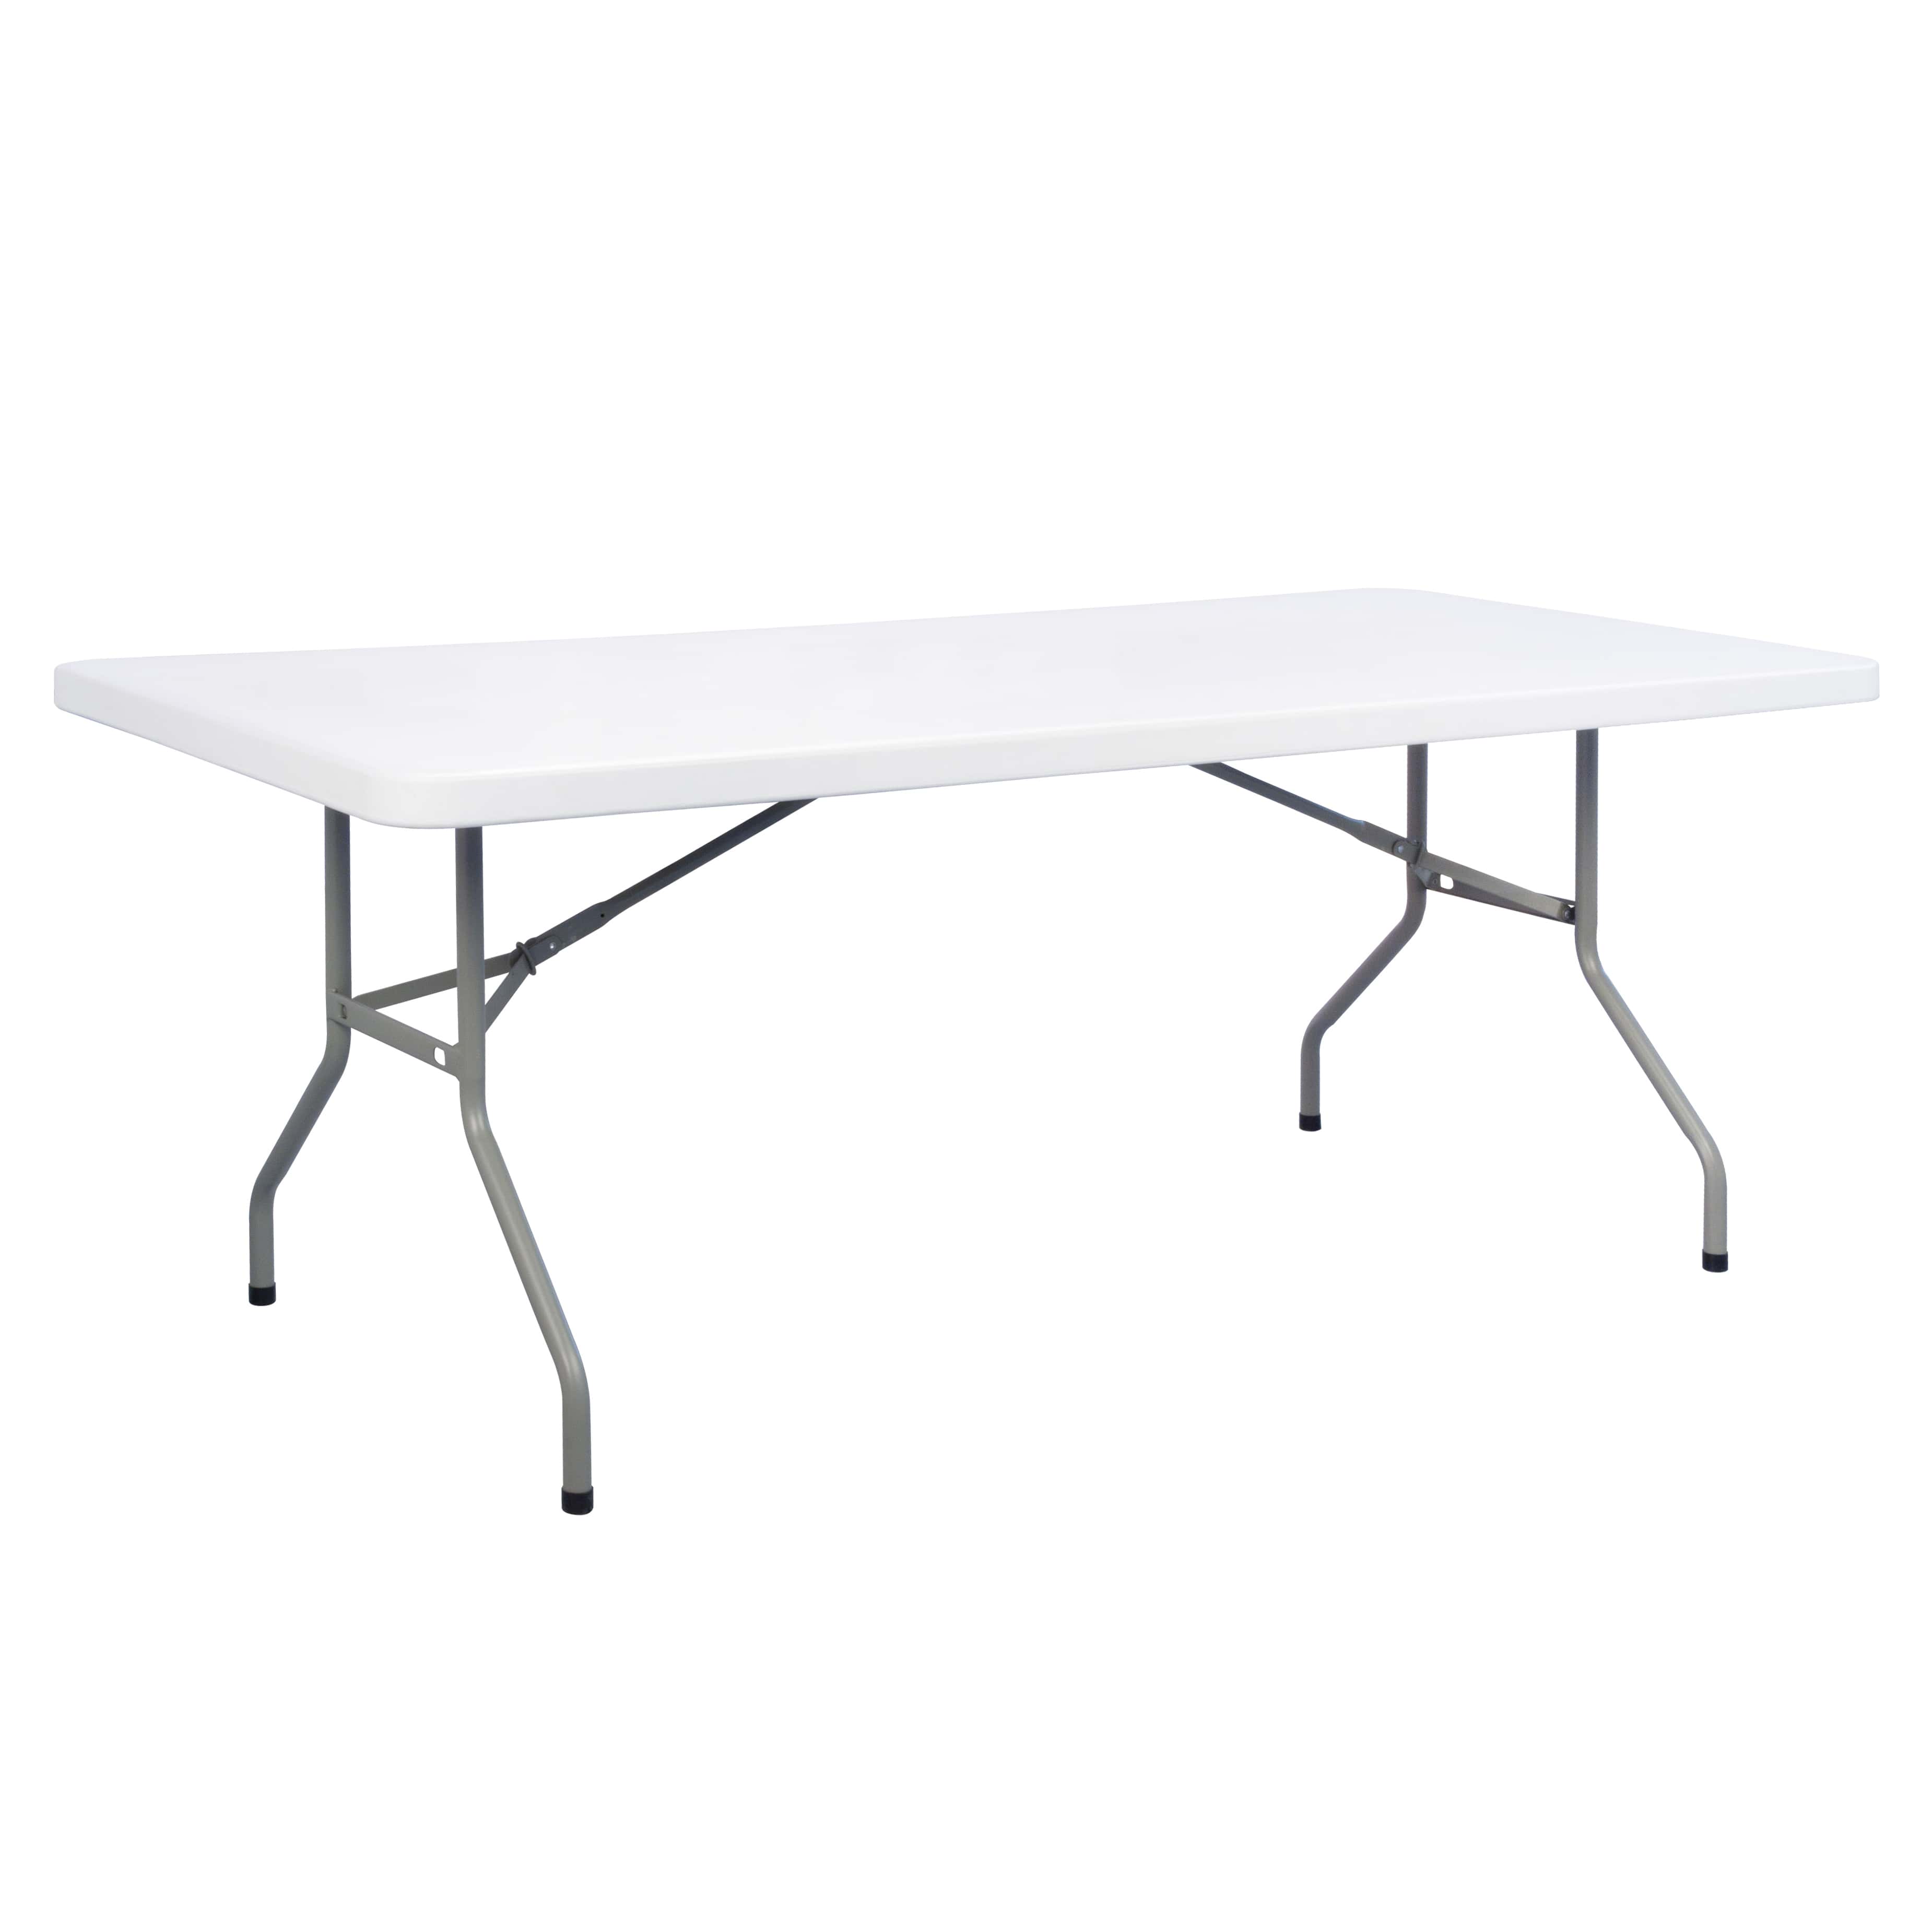 5ft Rectangular folding table 152cm / 4-6 people / light commercial